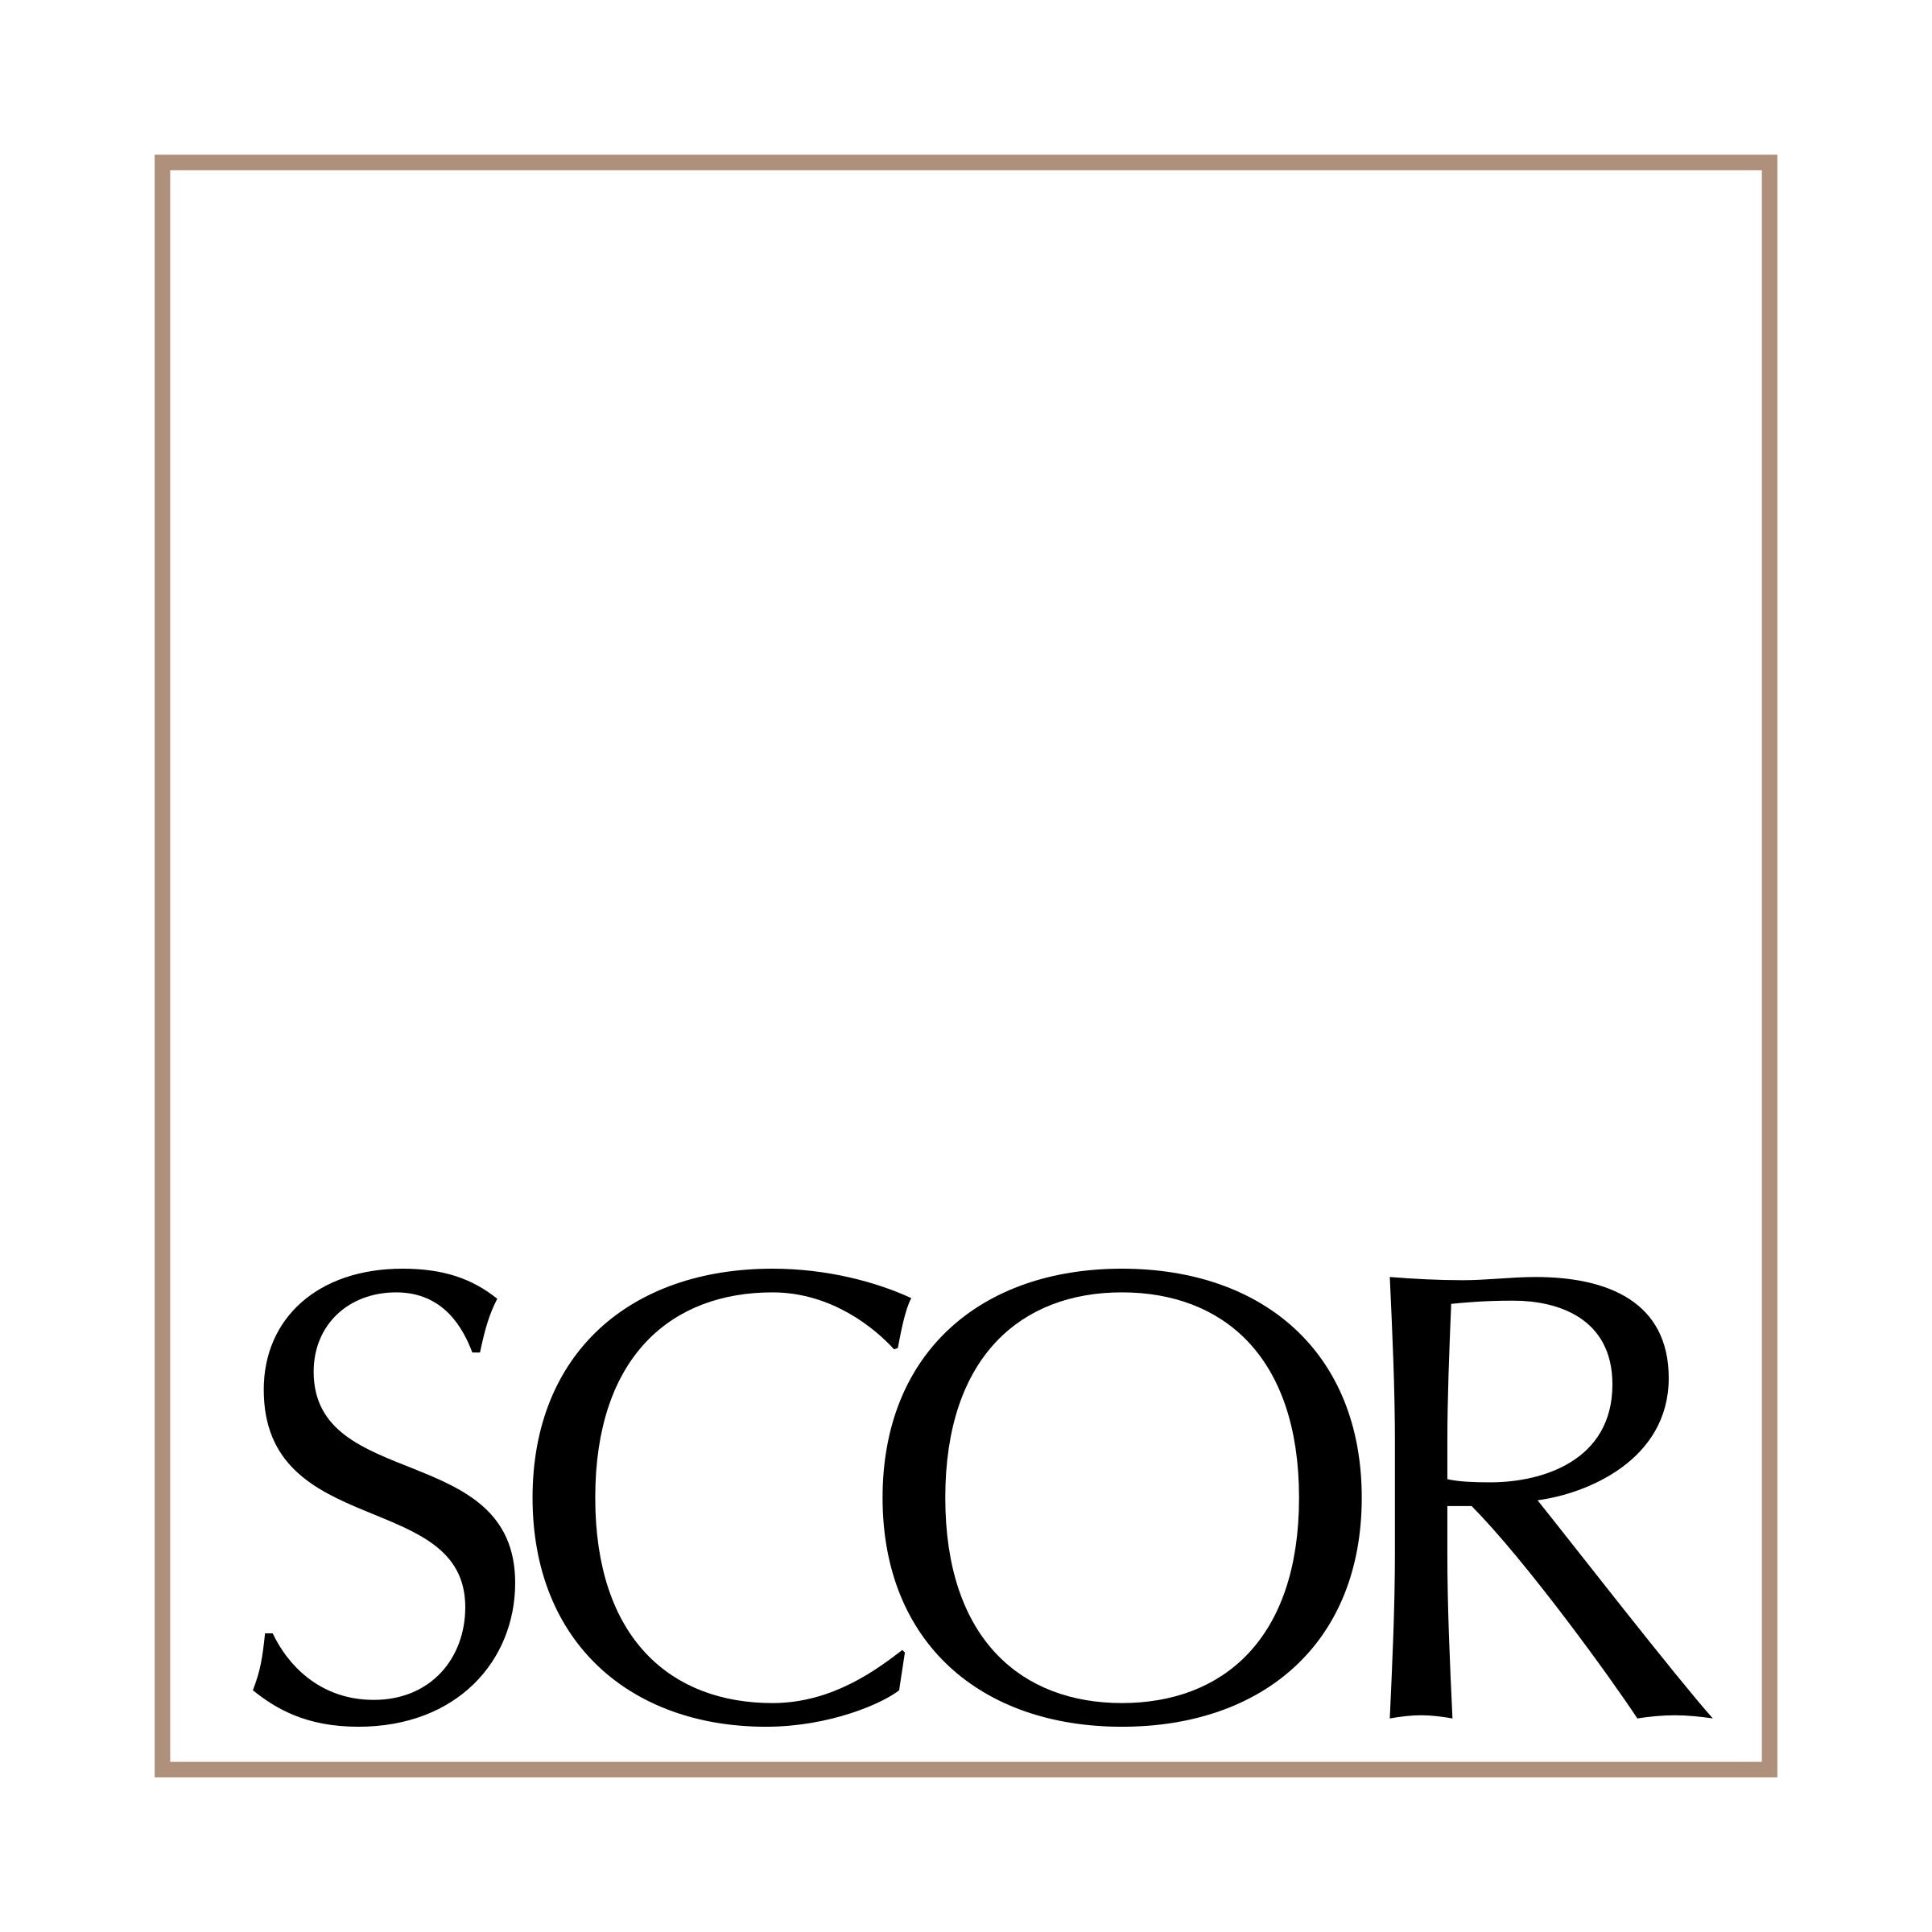 Scor Logo - Scor Logo PNG Transparent & SVG Vector - Freebie Supply